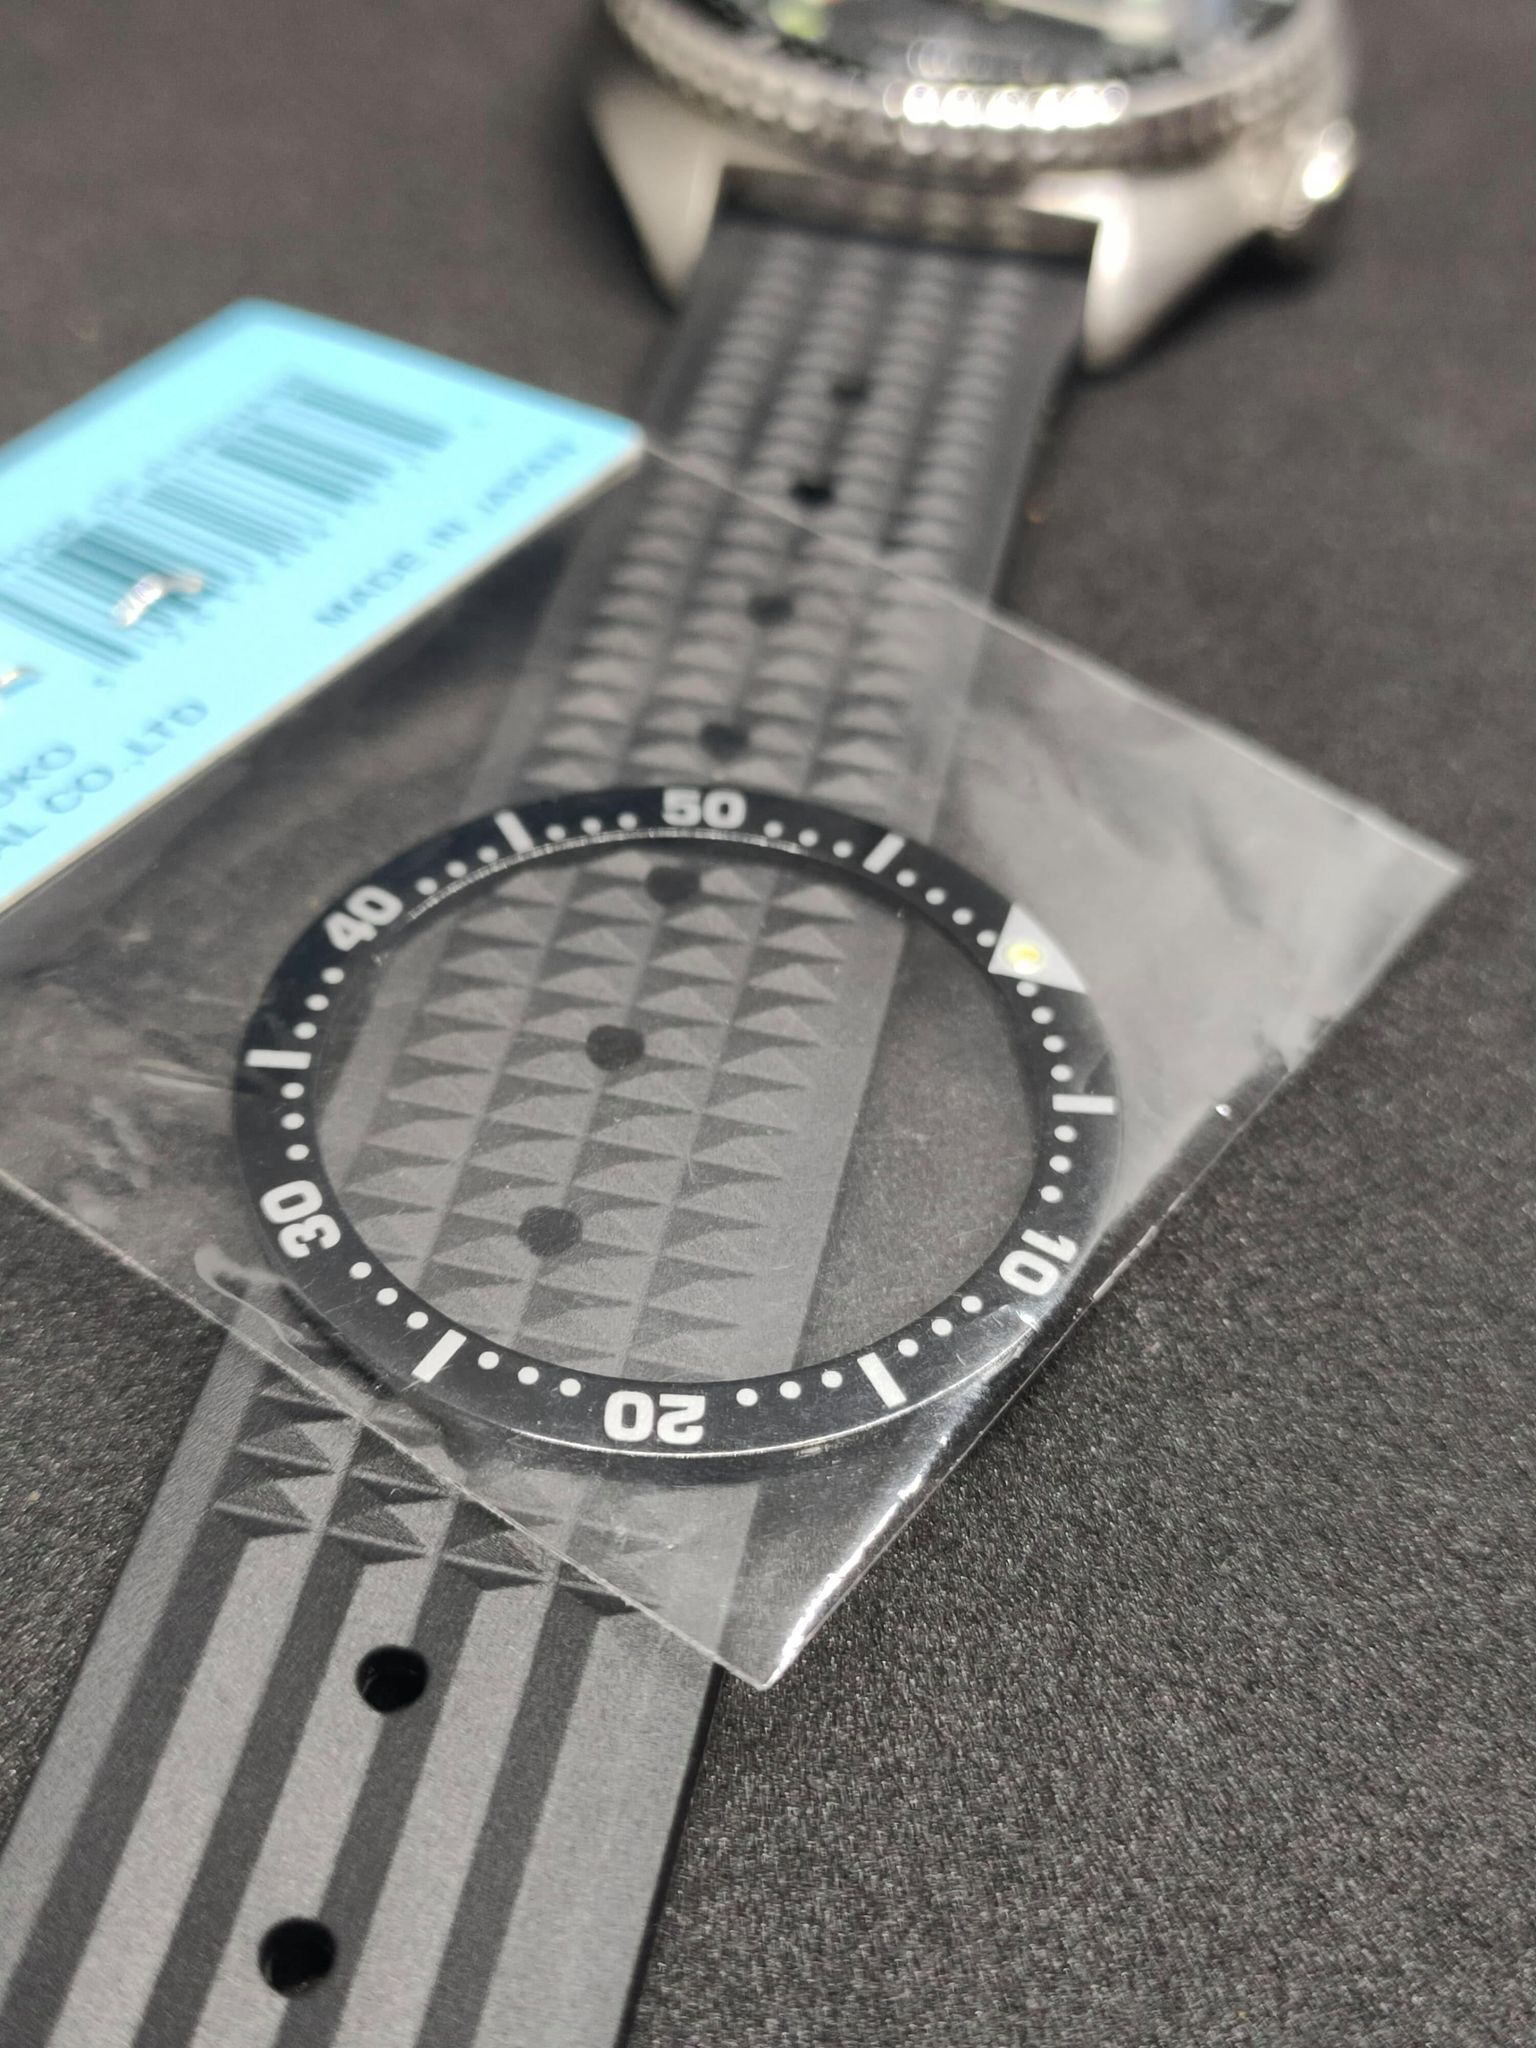 SKX013 4205 Aftermarket Bezel Insert for Medium Seiko Divers Watches |  Lazada PH